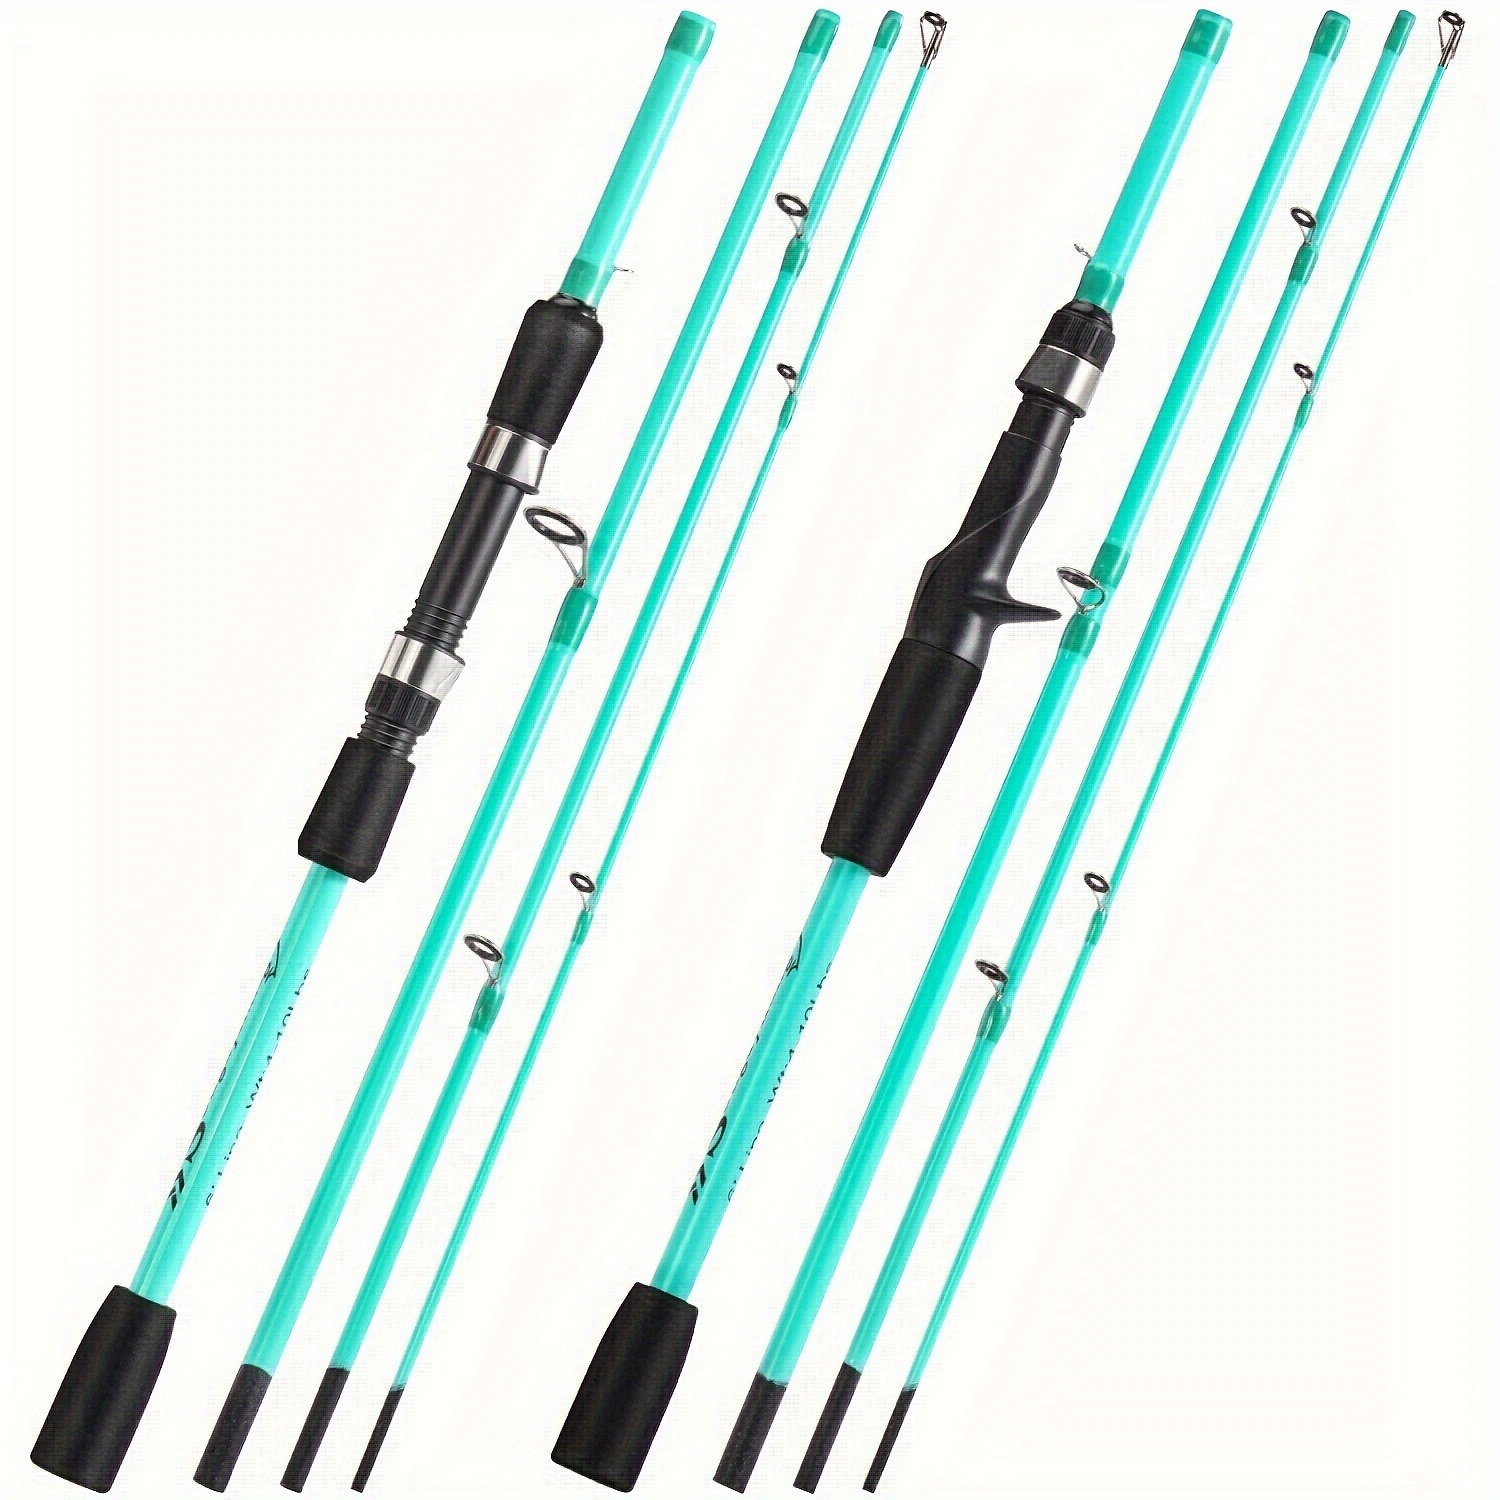 Sougayilang 4 sections Fishing Rod Carbon Fiber Glass Fiber - Temu